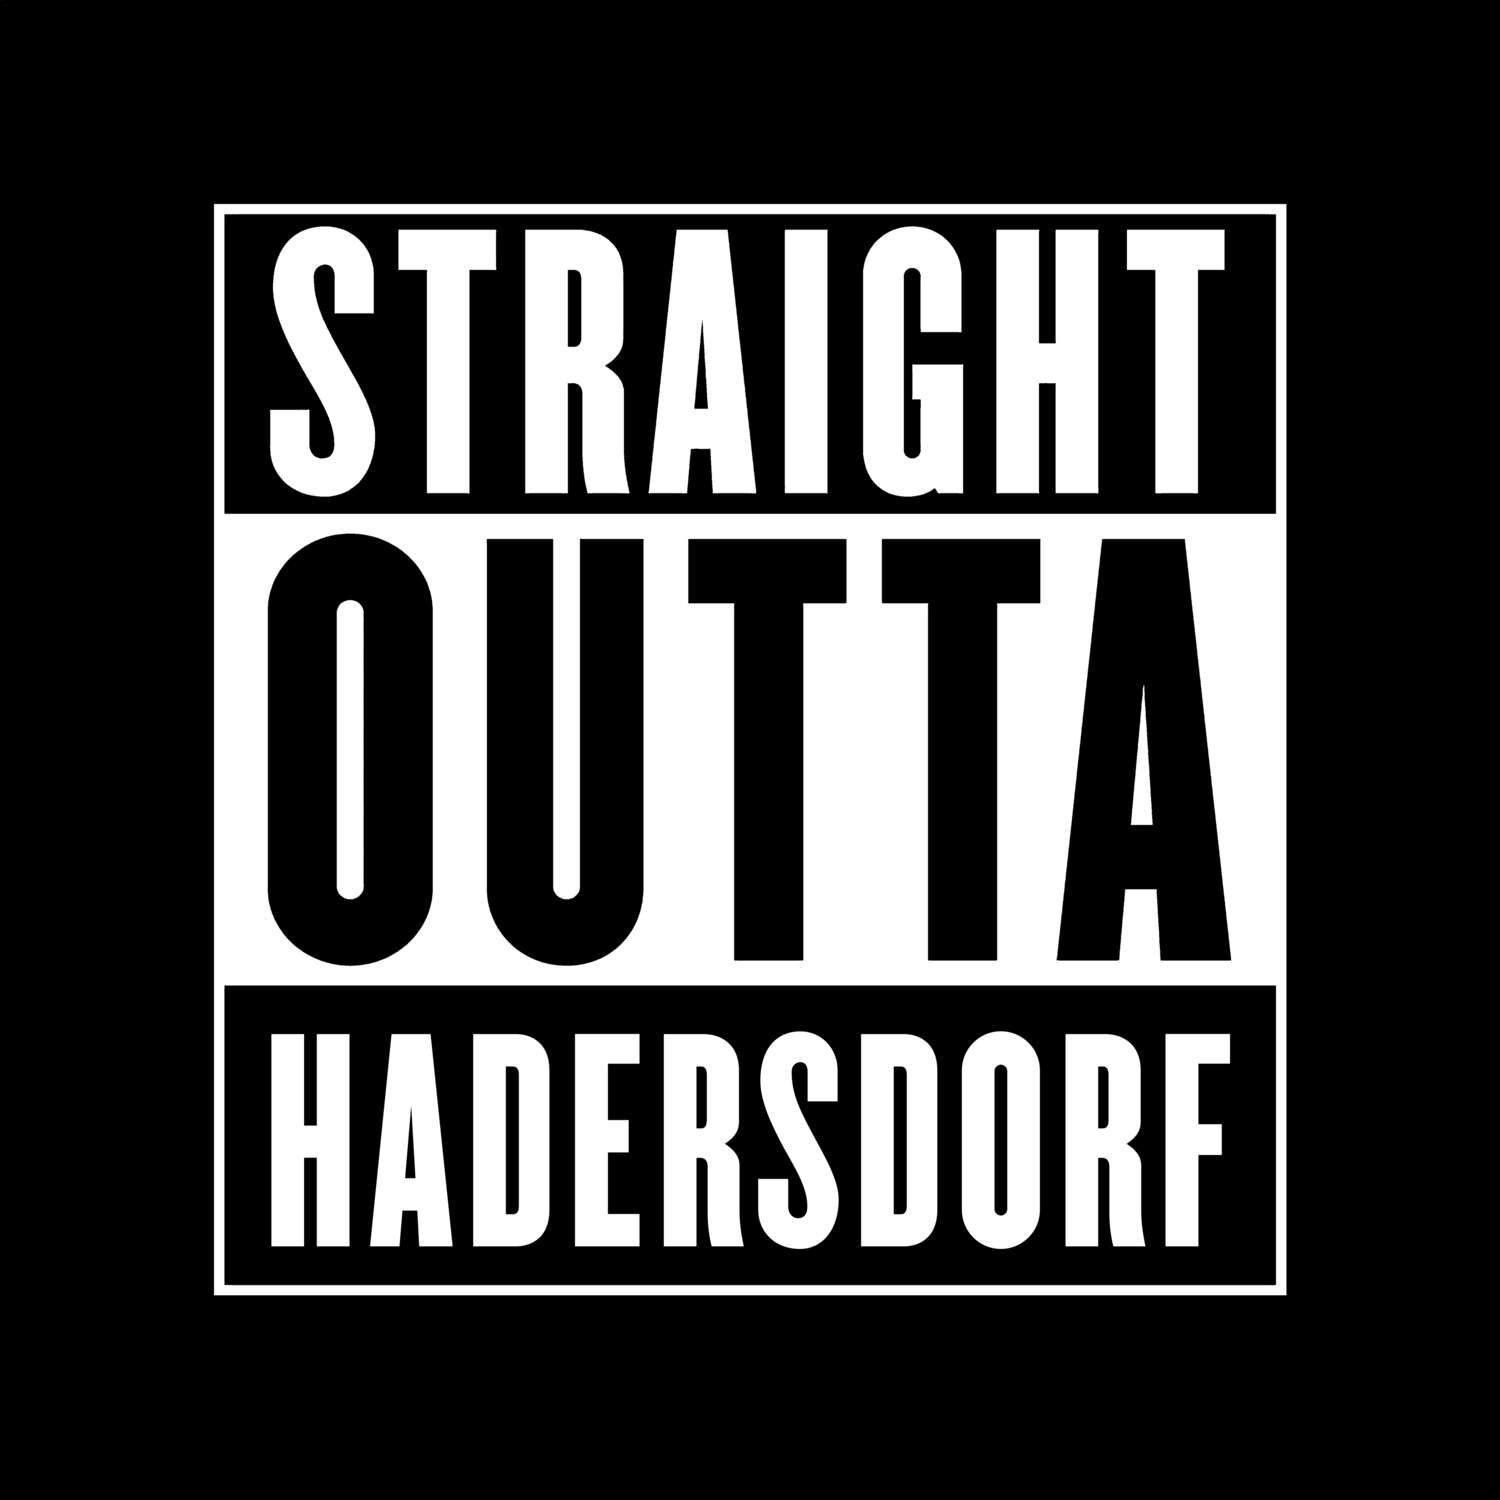 Hadersdorf T-Shirt »Straight Outta«